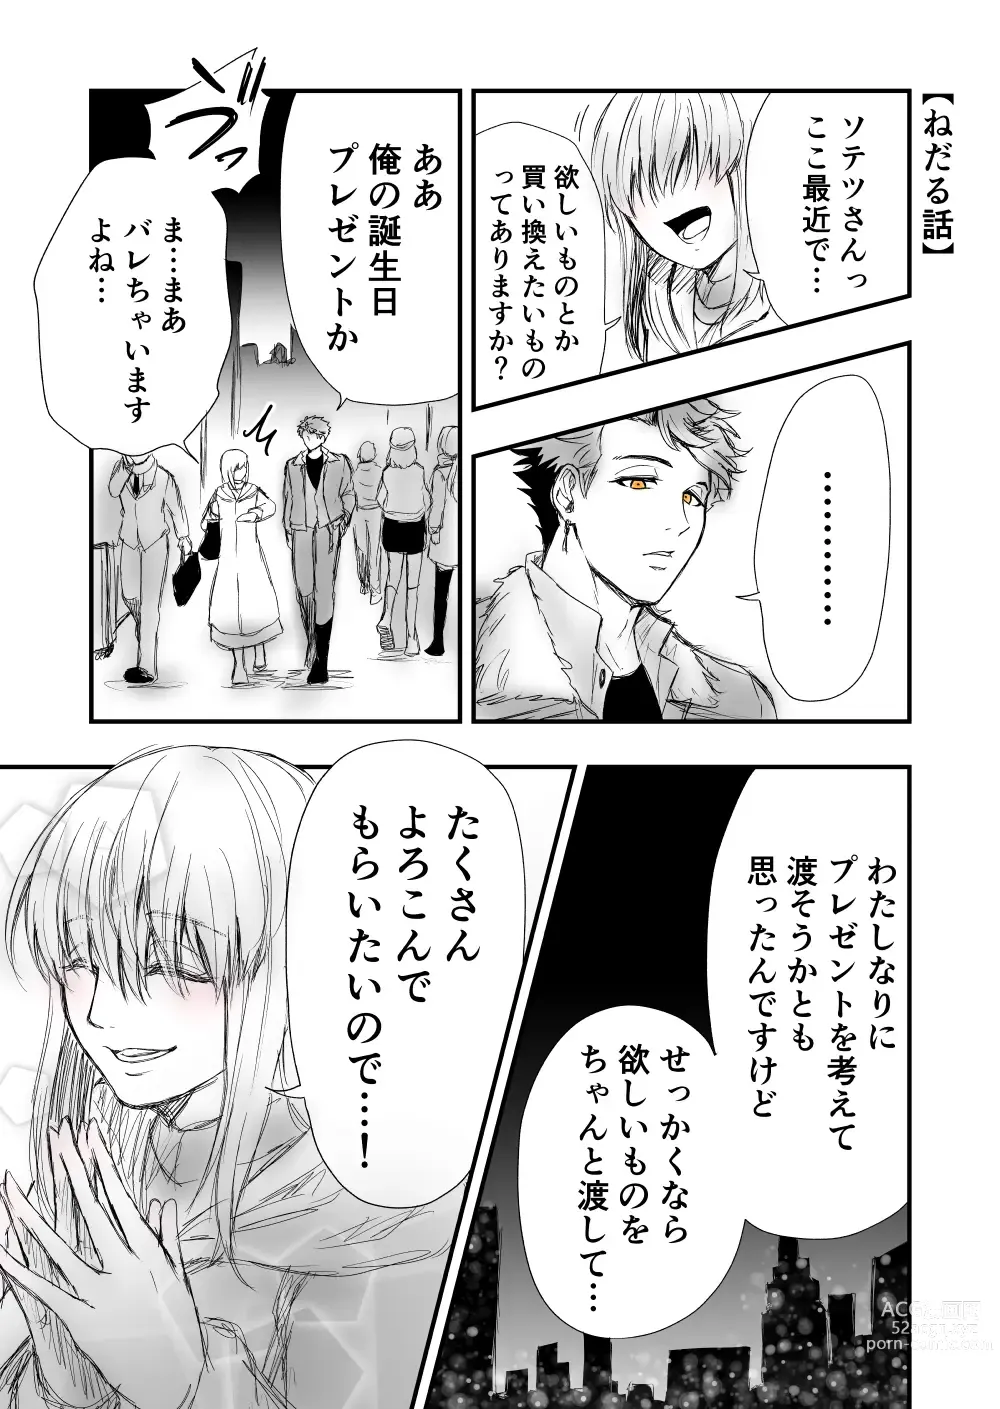 Page 3 of doujinshi 3